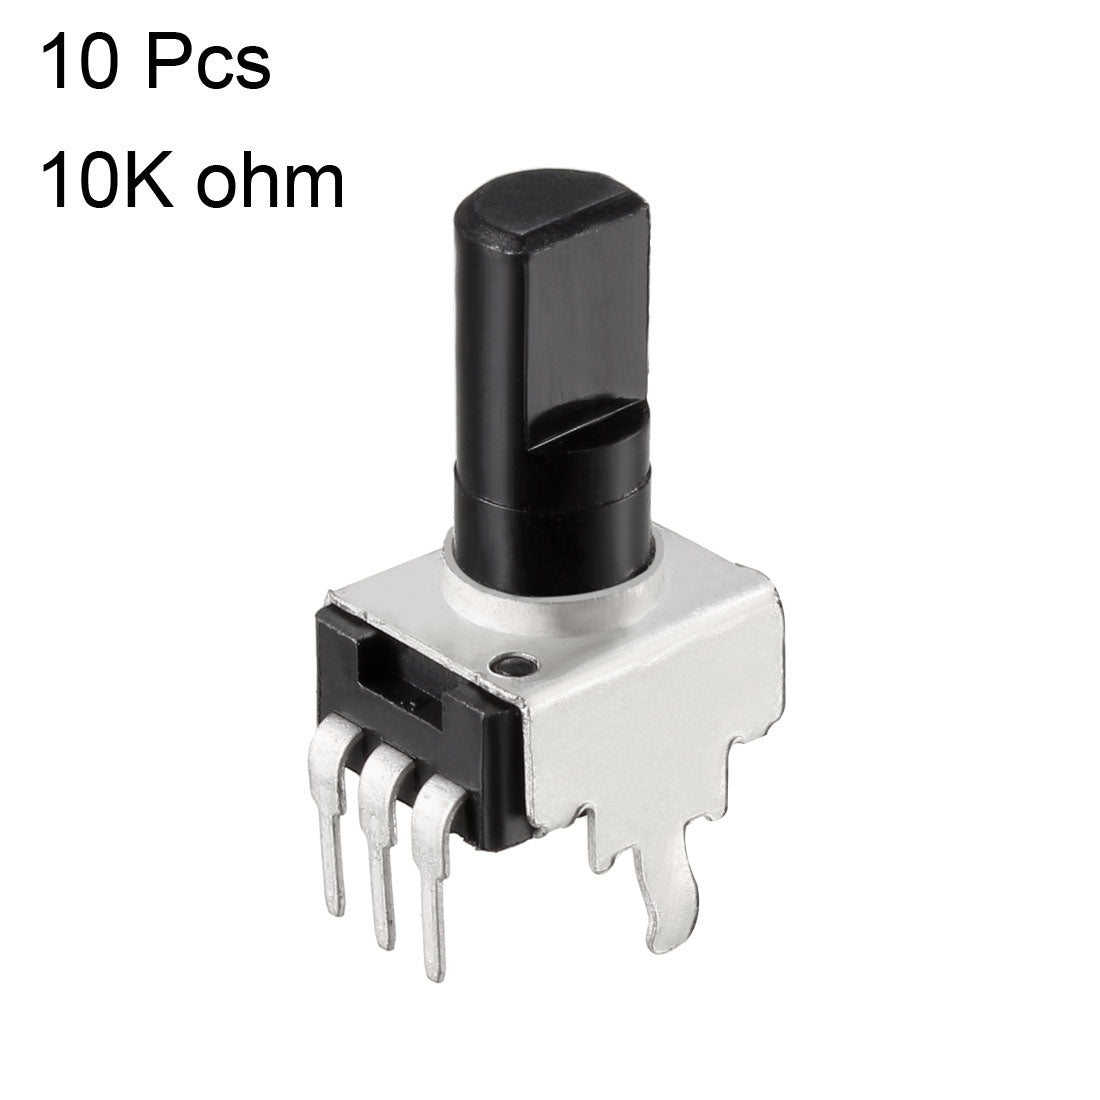 uxcell Uxcell Carbon Film Potentiometer, 10K Ohm Variable Resistors Single Turn Rotary Half Shaft Design 10pcs